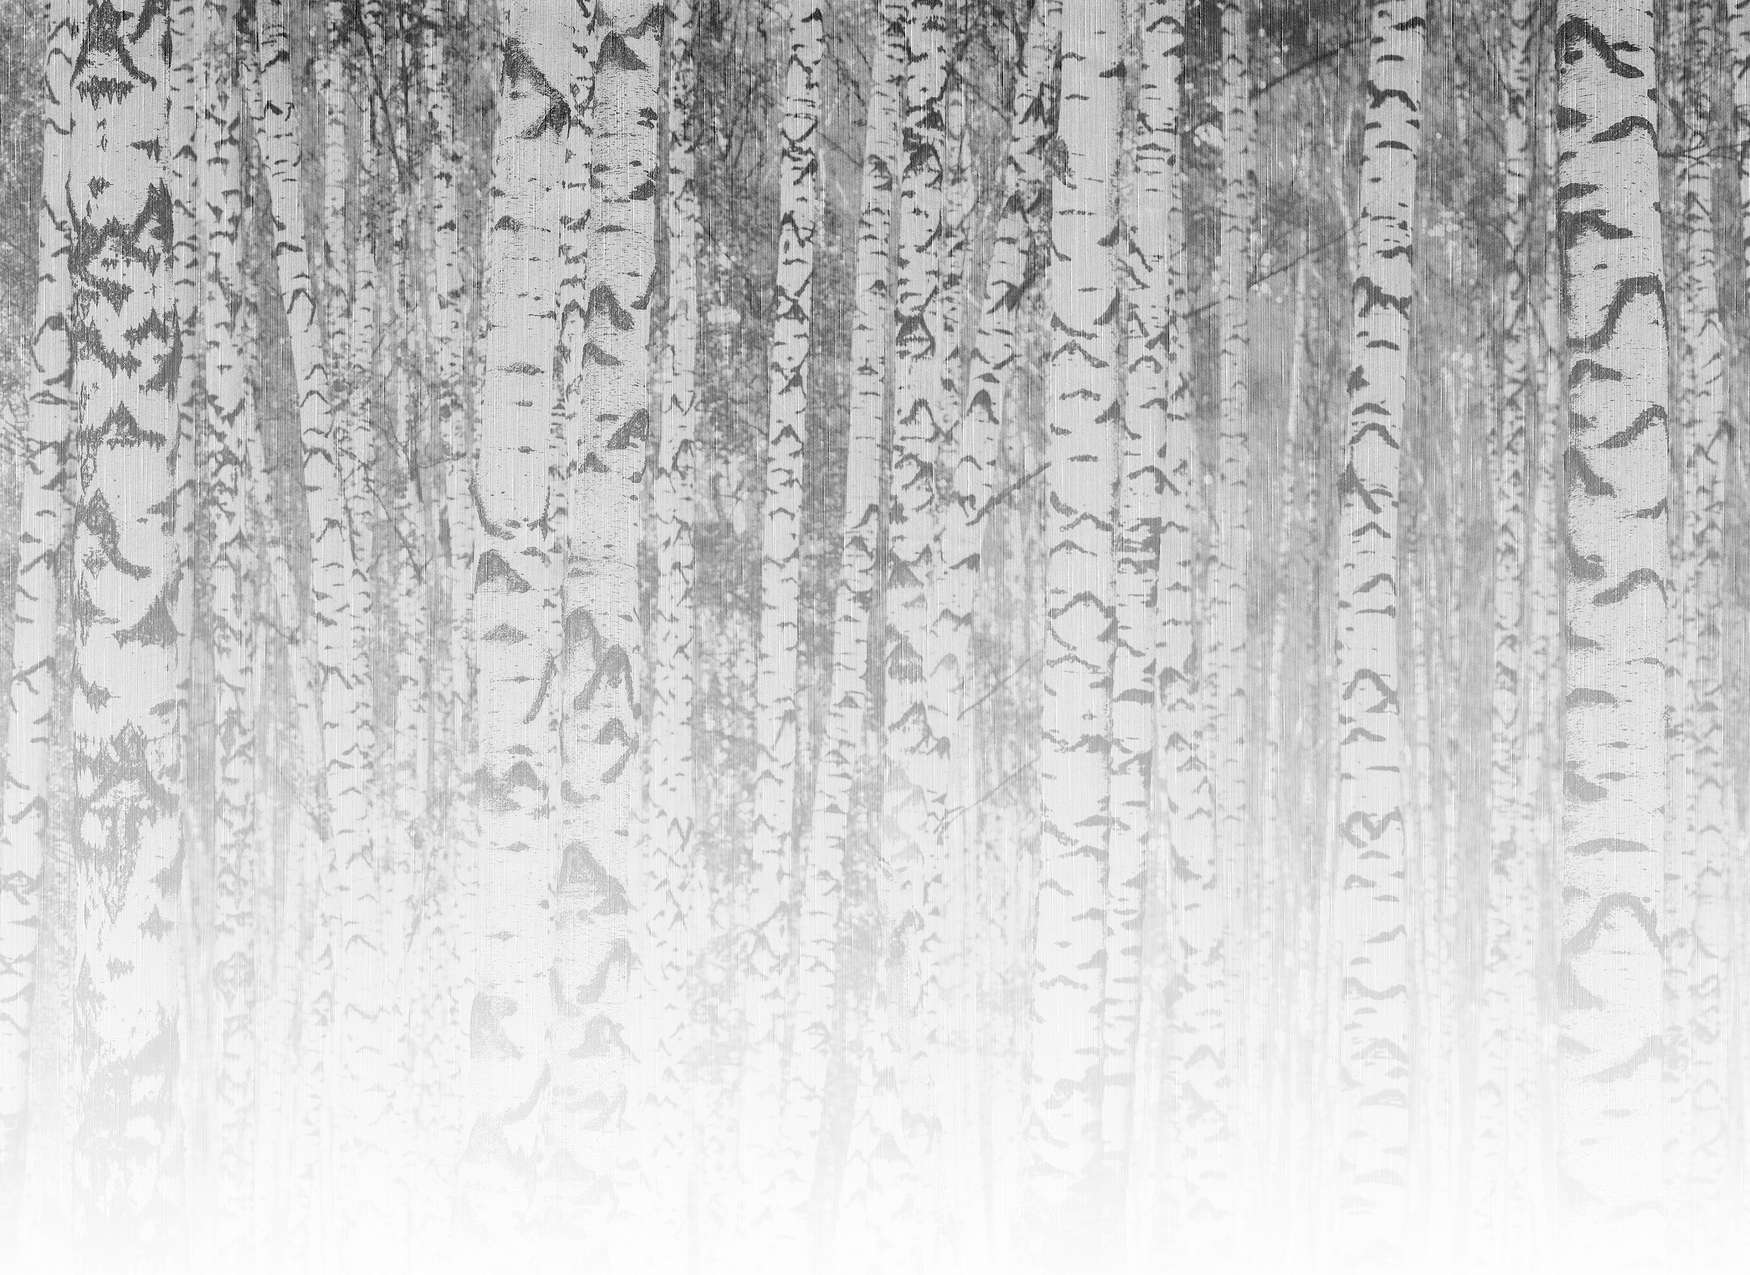             Digital behang lichte berkenstammen in mistig bos - zwart en wit
        